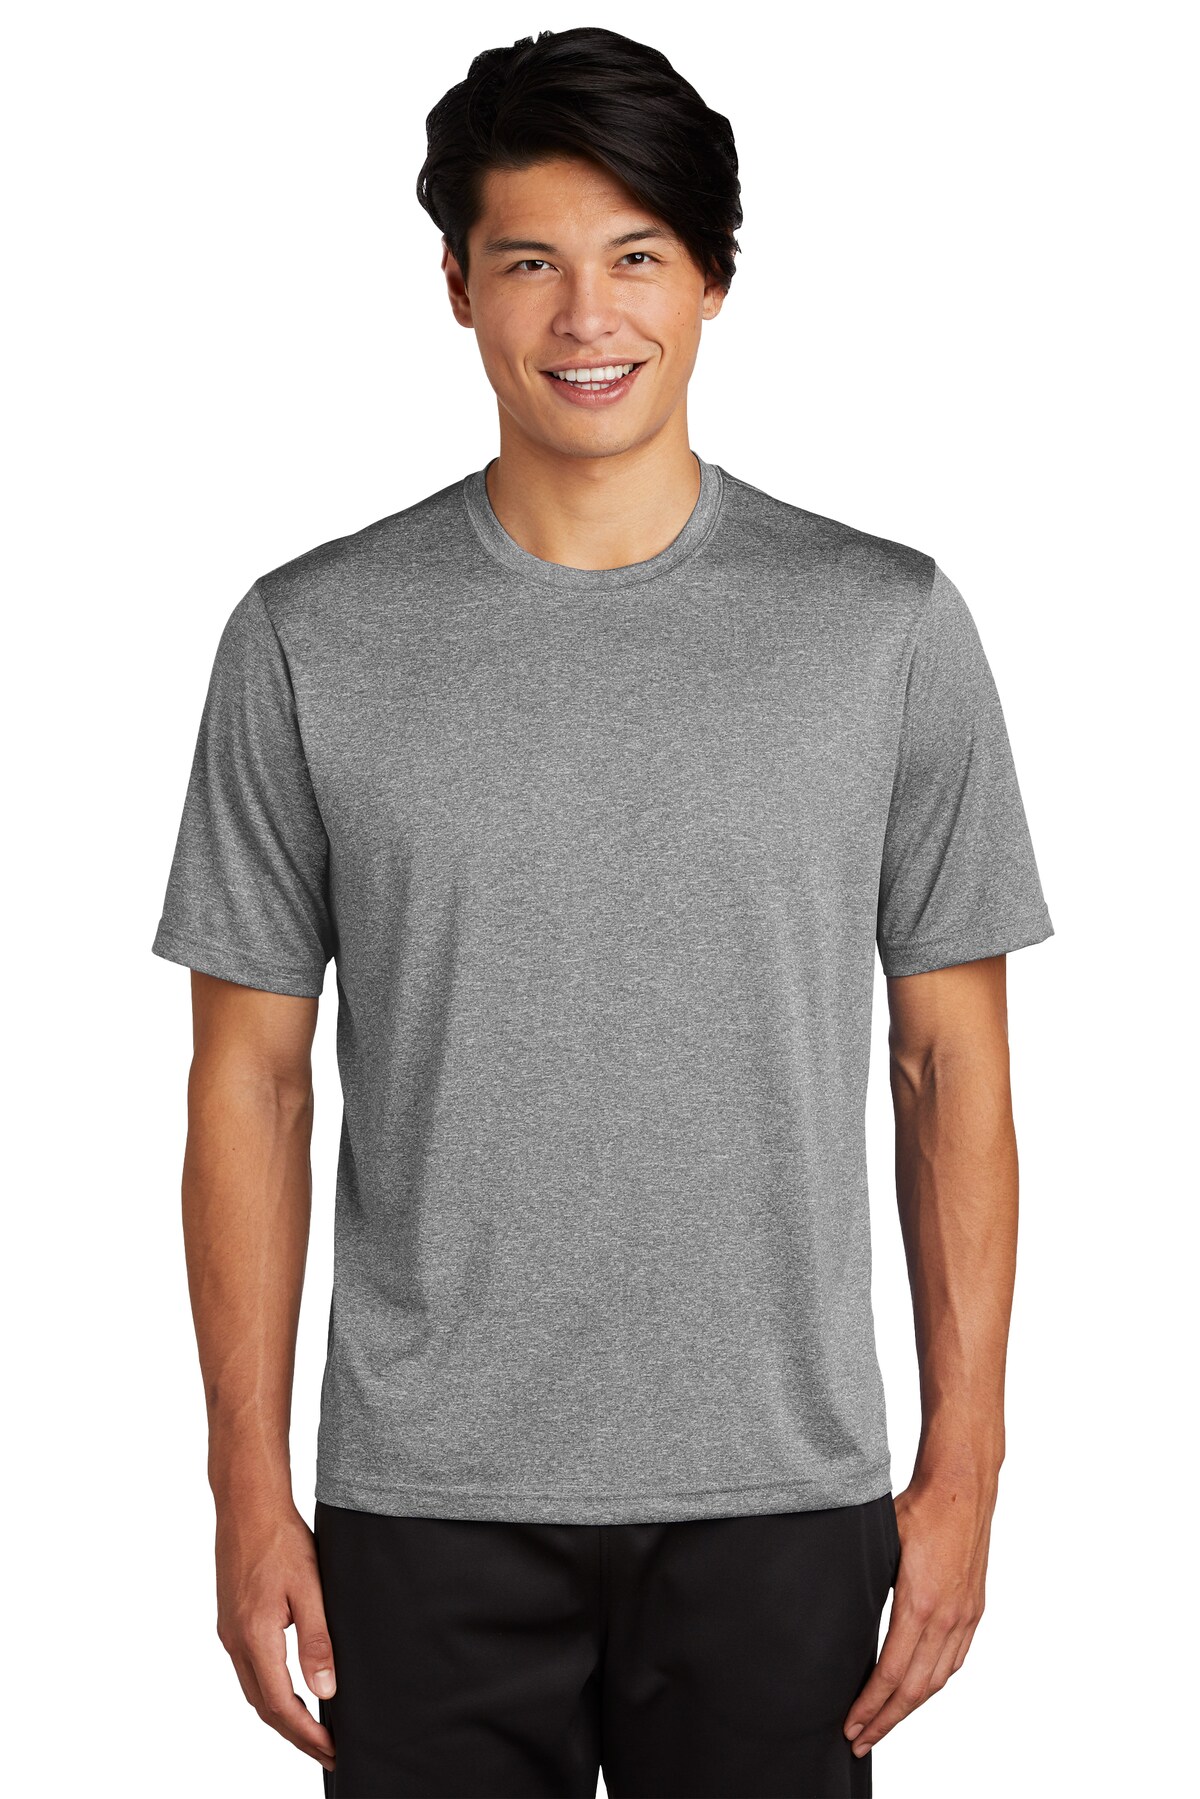 Premium Fitted Men's T-Shirts - Crew Neck